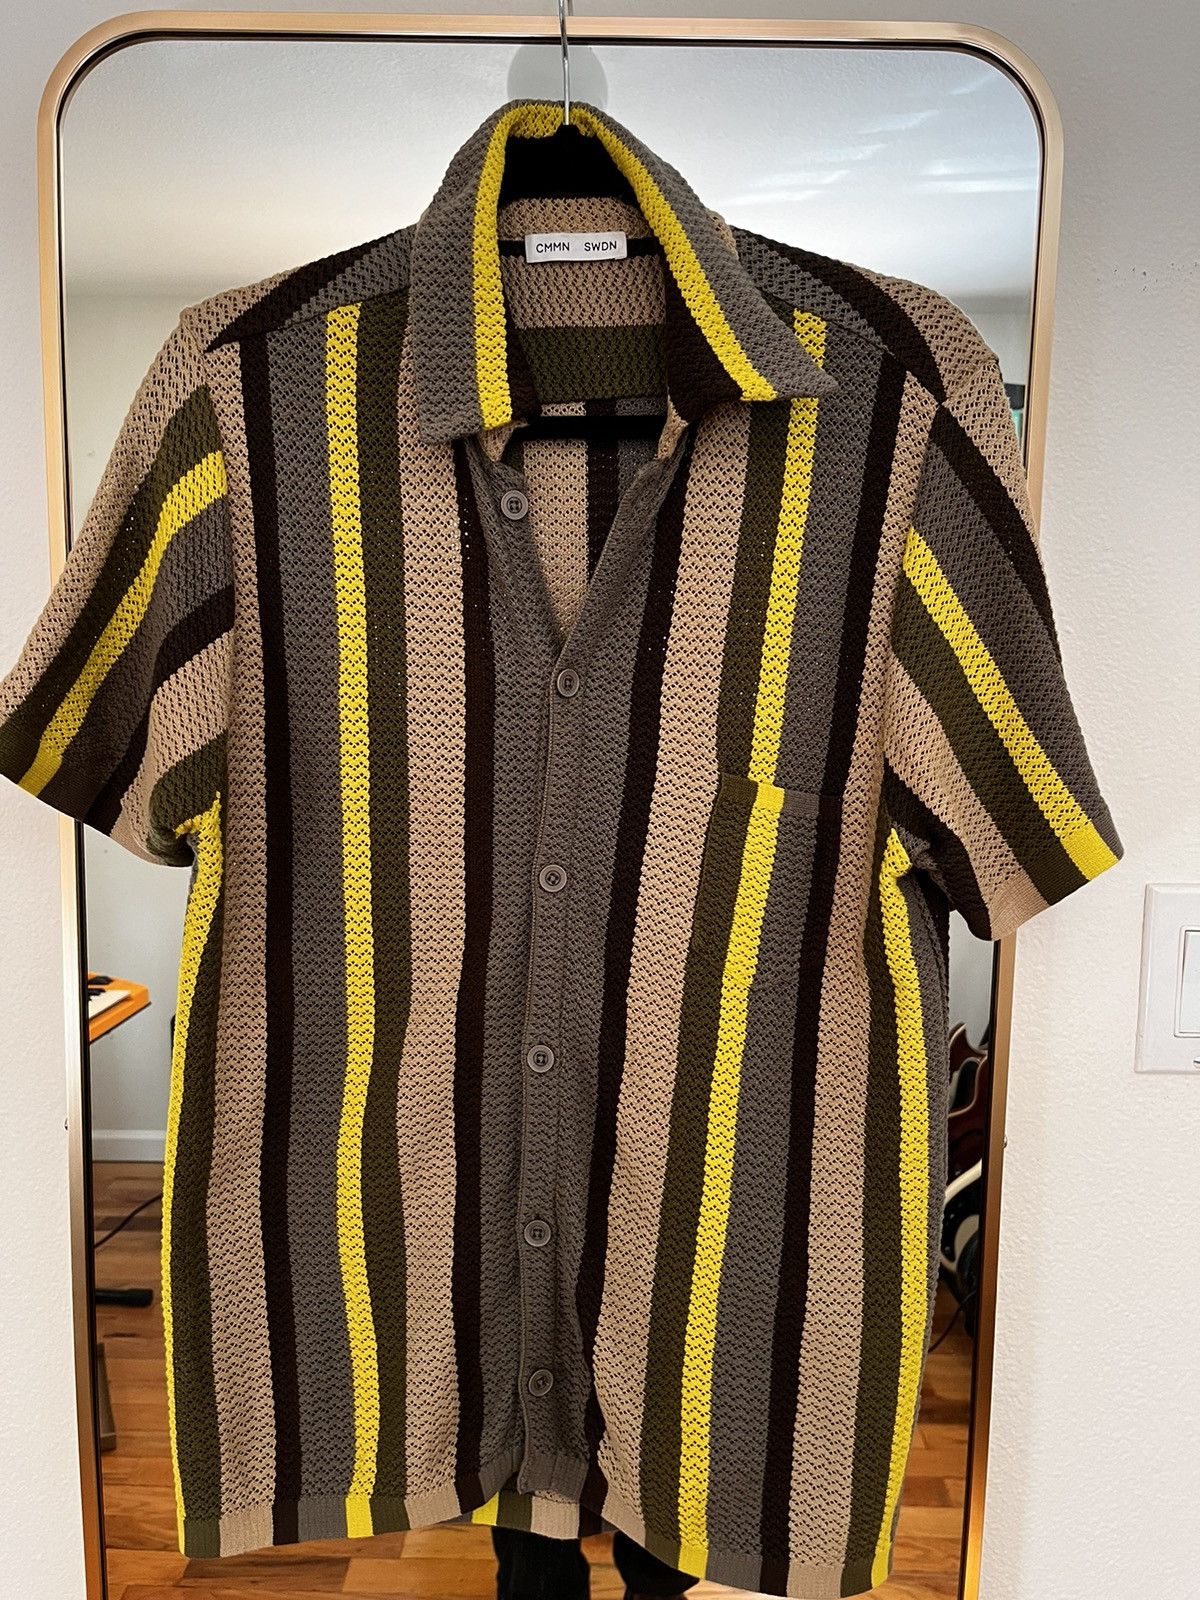 Cmmn Swdn CMMN SWDN Wes Knitted Shirt Multistripe Vertical Stripe ...